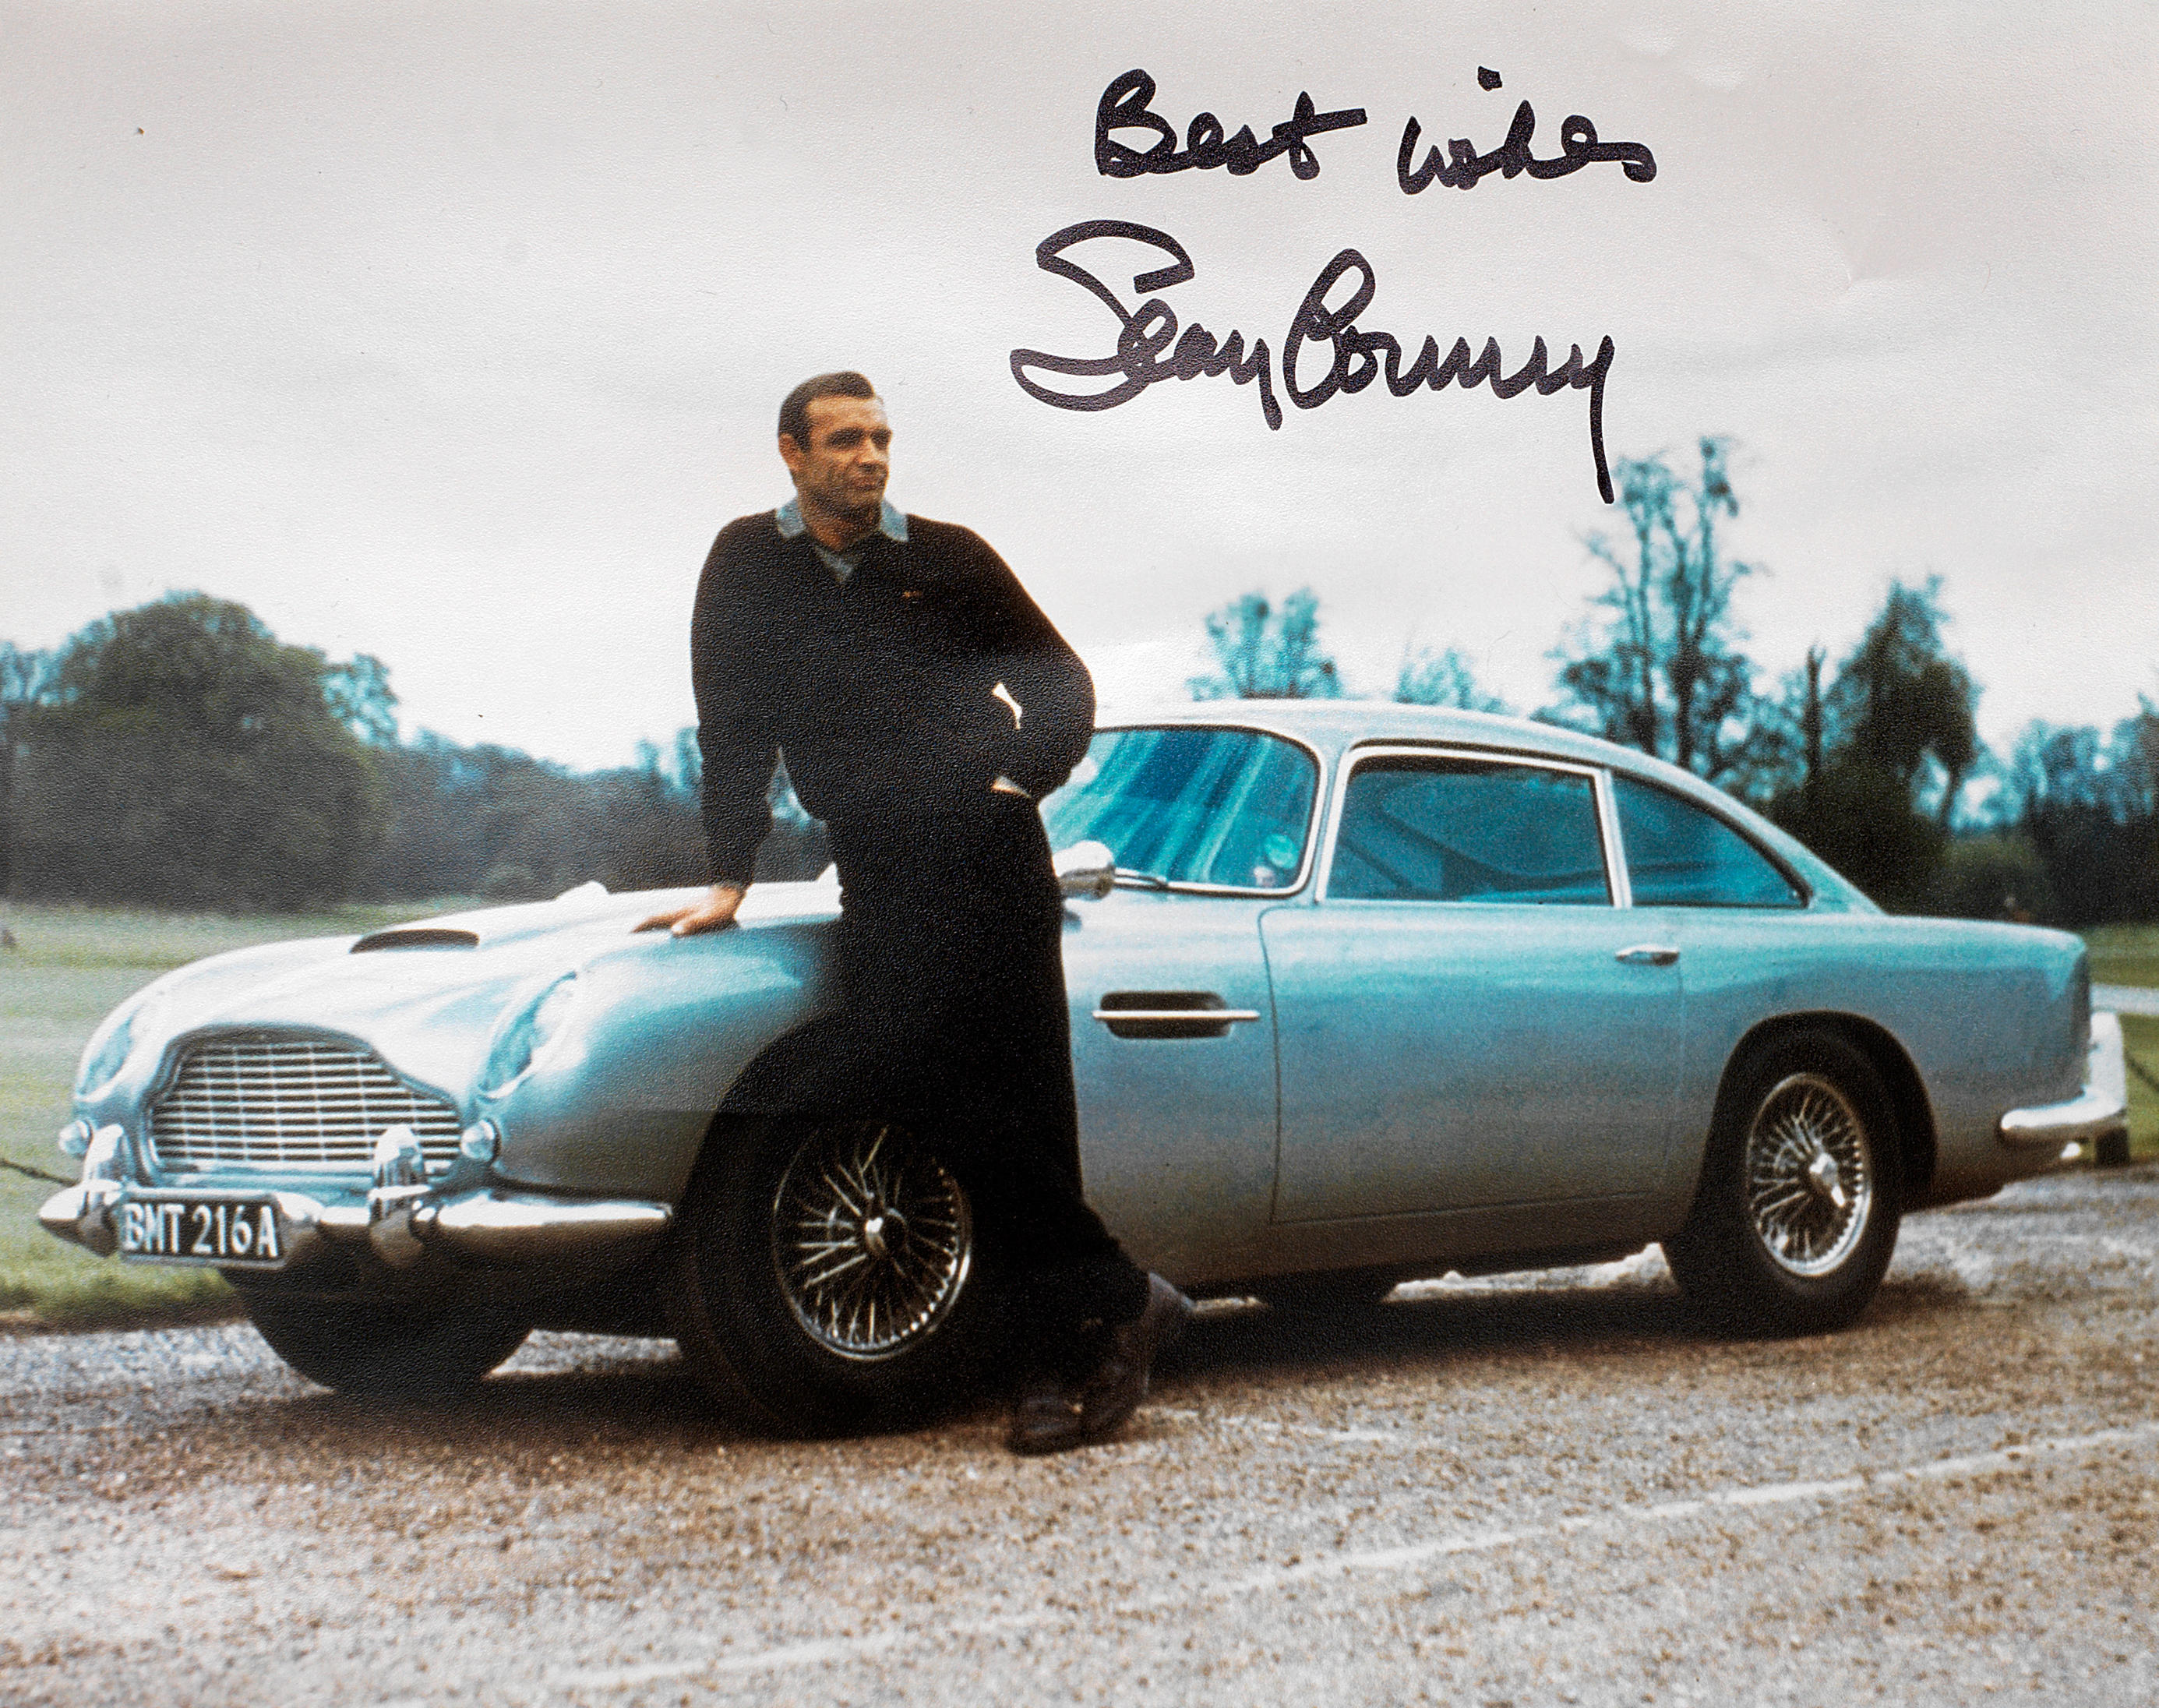 Bonhams Cars : A signed photograph of Sean Connery as James Bond with ...